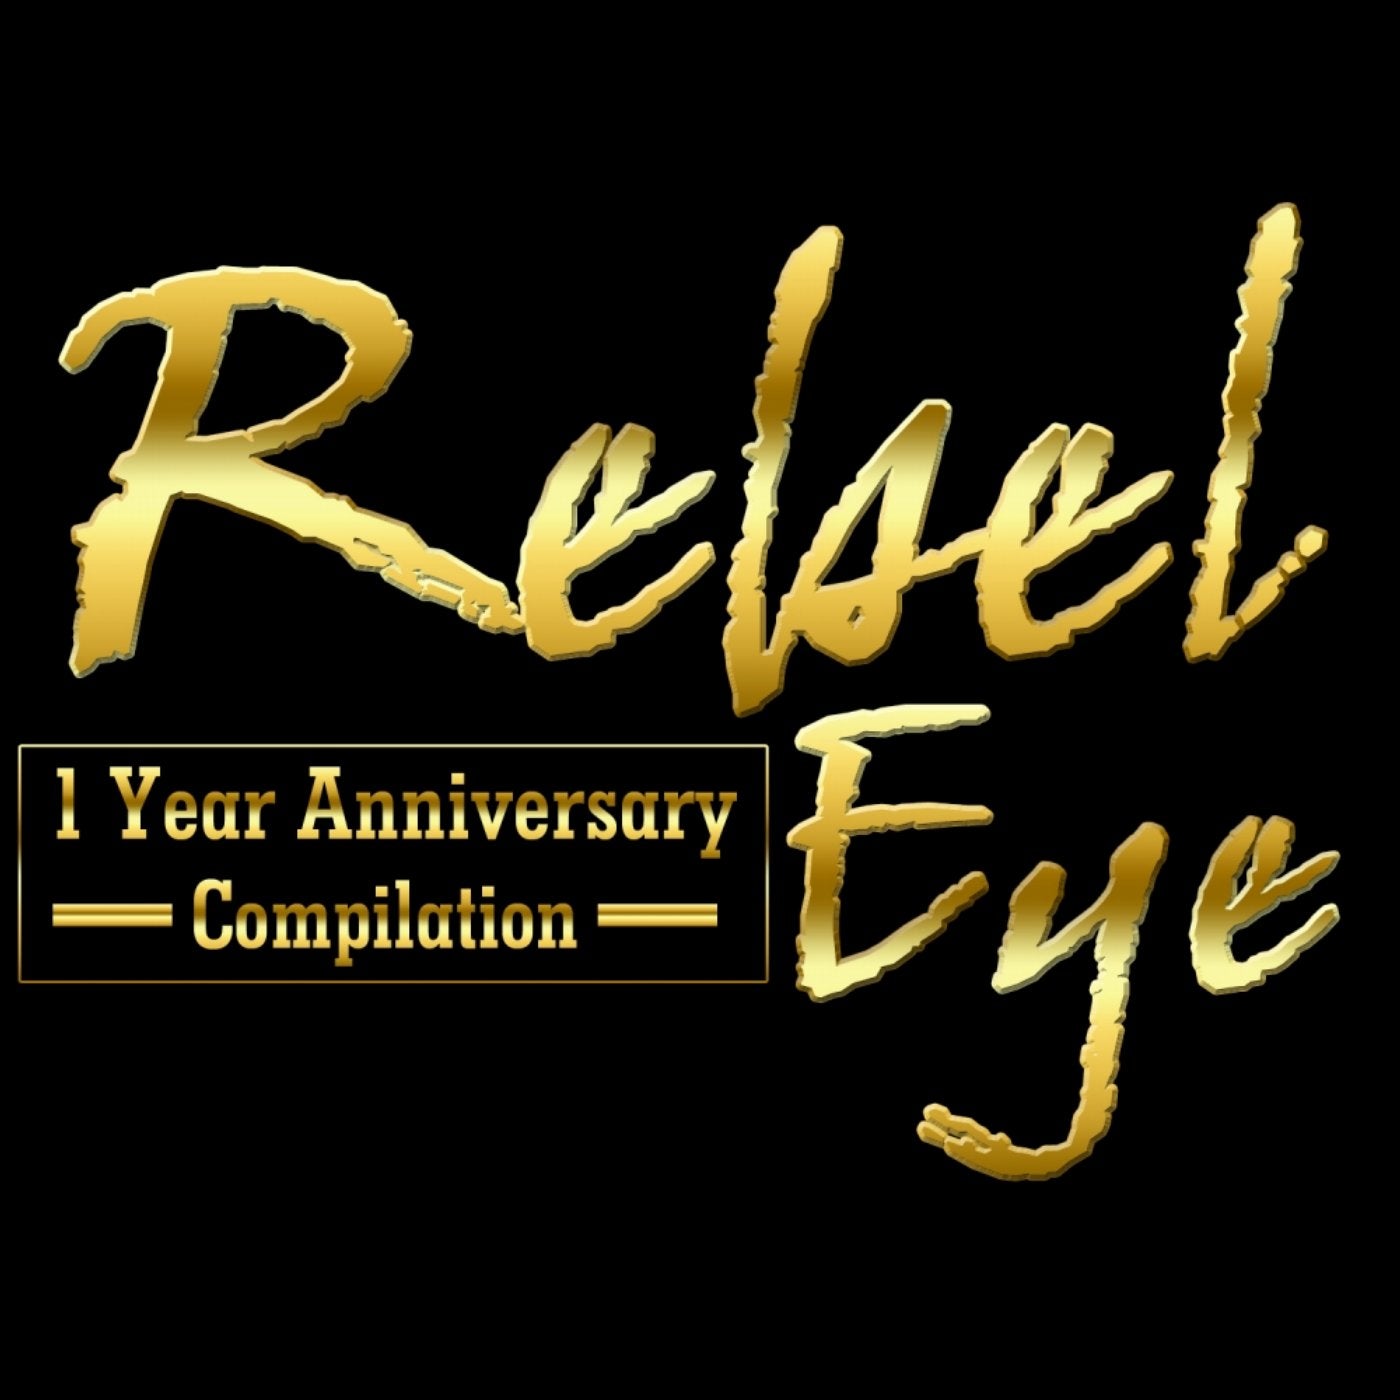 Rebel Eye 1 Year Anniversary Compilation